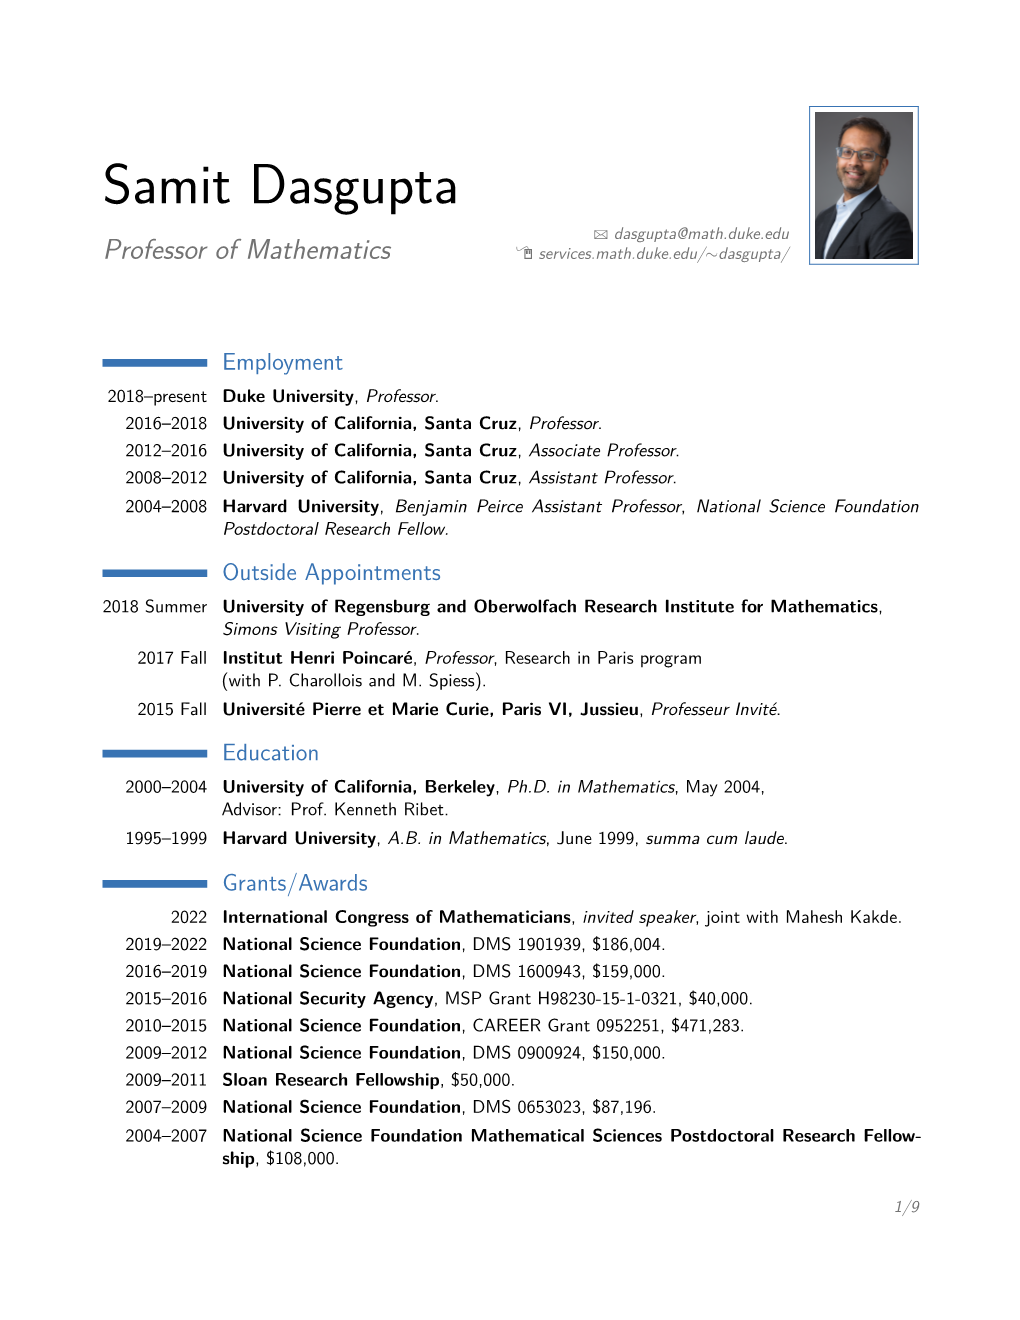 Samit Dasgupta – Professor of Mathematics